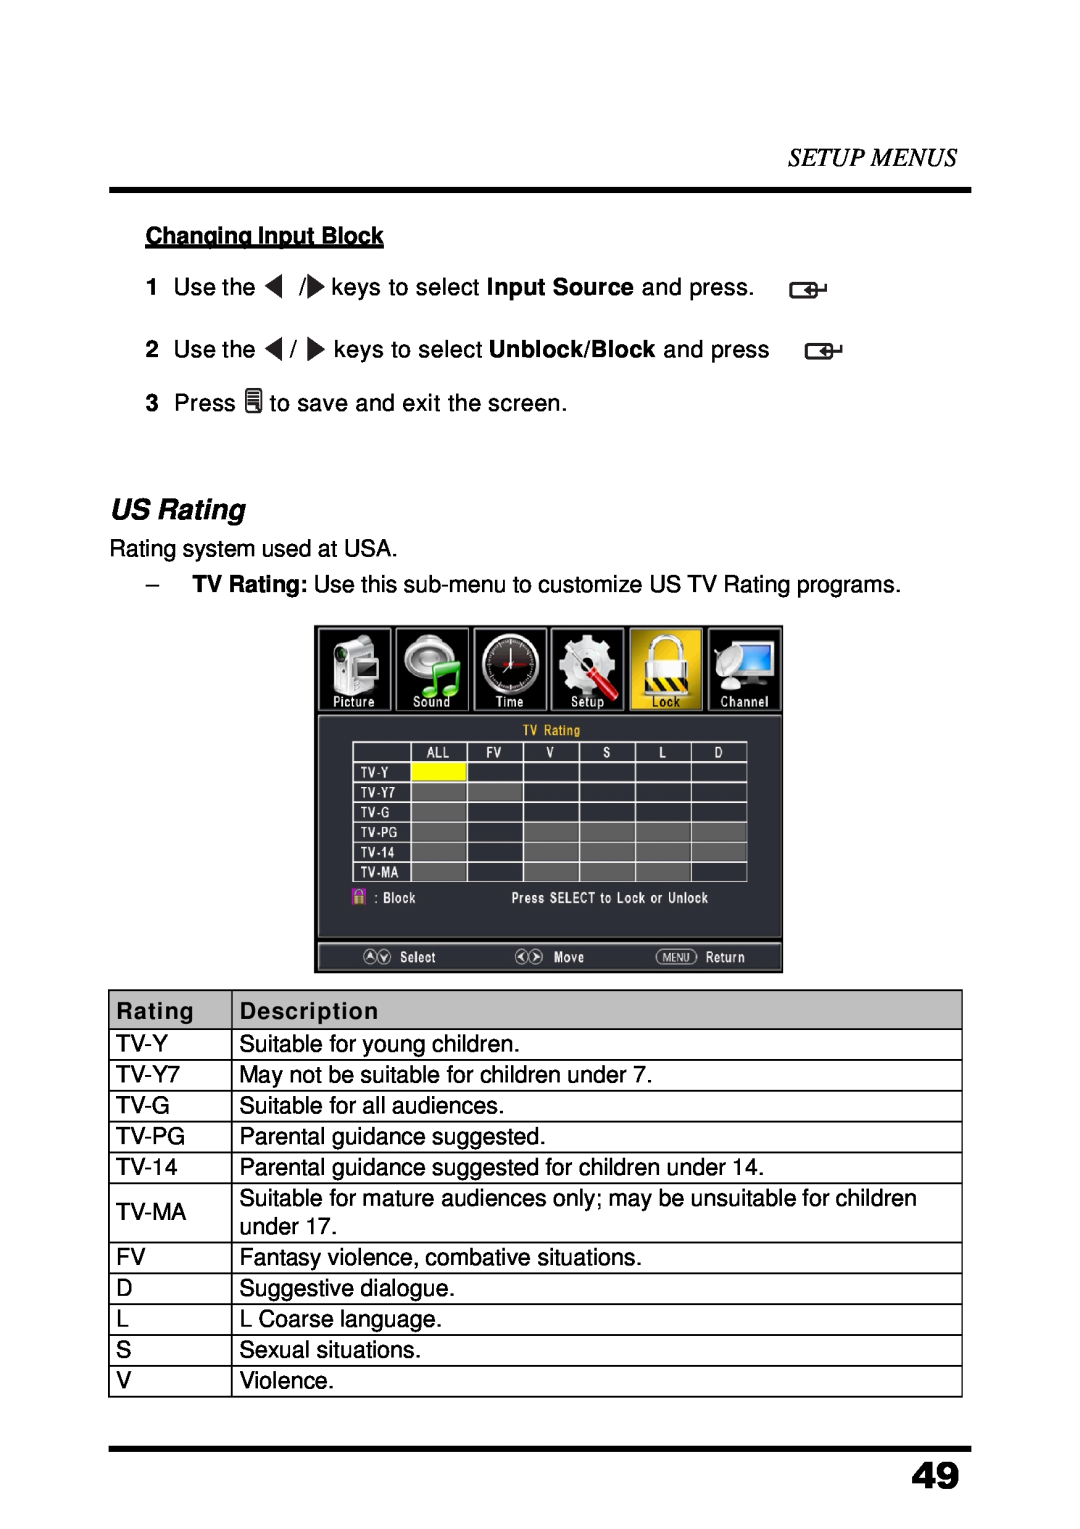 Westinghouse UW48T7HW manual US Rating, Setup Menus, Changing Input Block, Description 